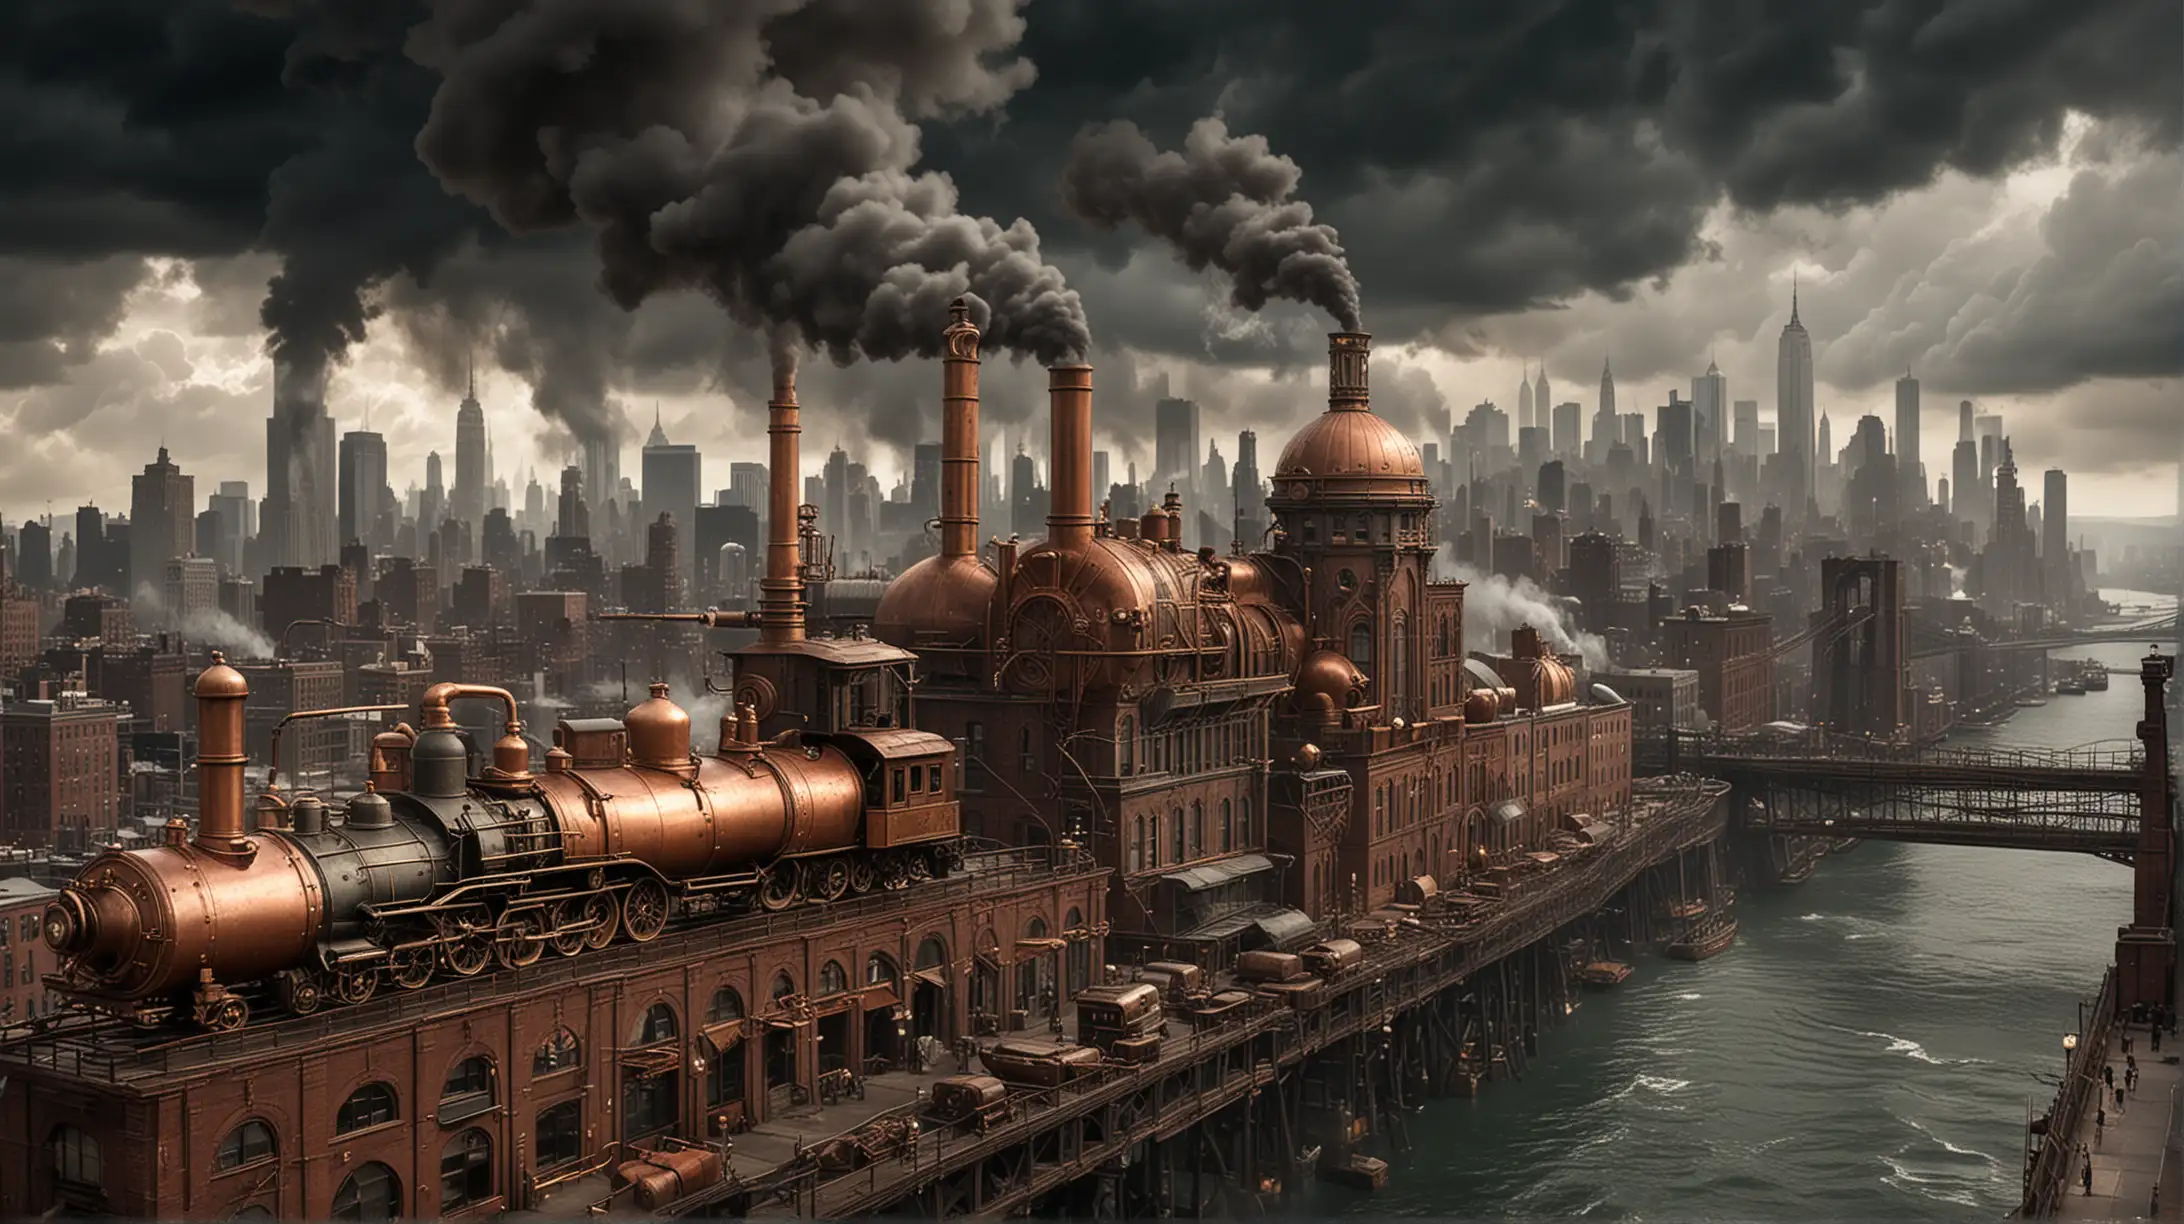 the steampunk version of New York, copper, brass, steel, steam, smoke, stormy weather